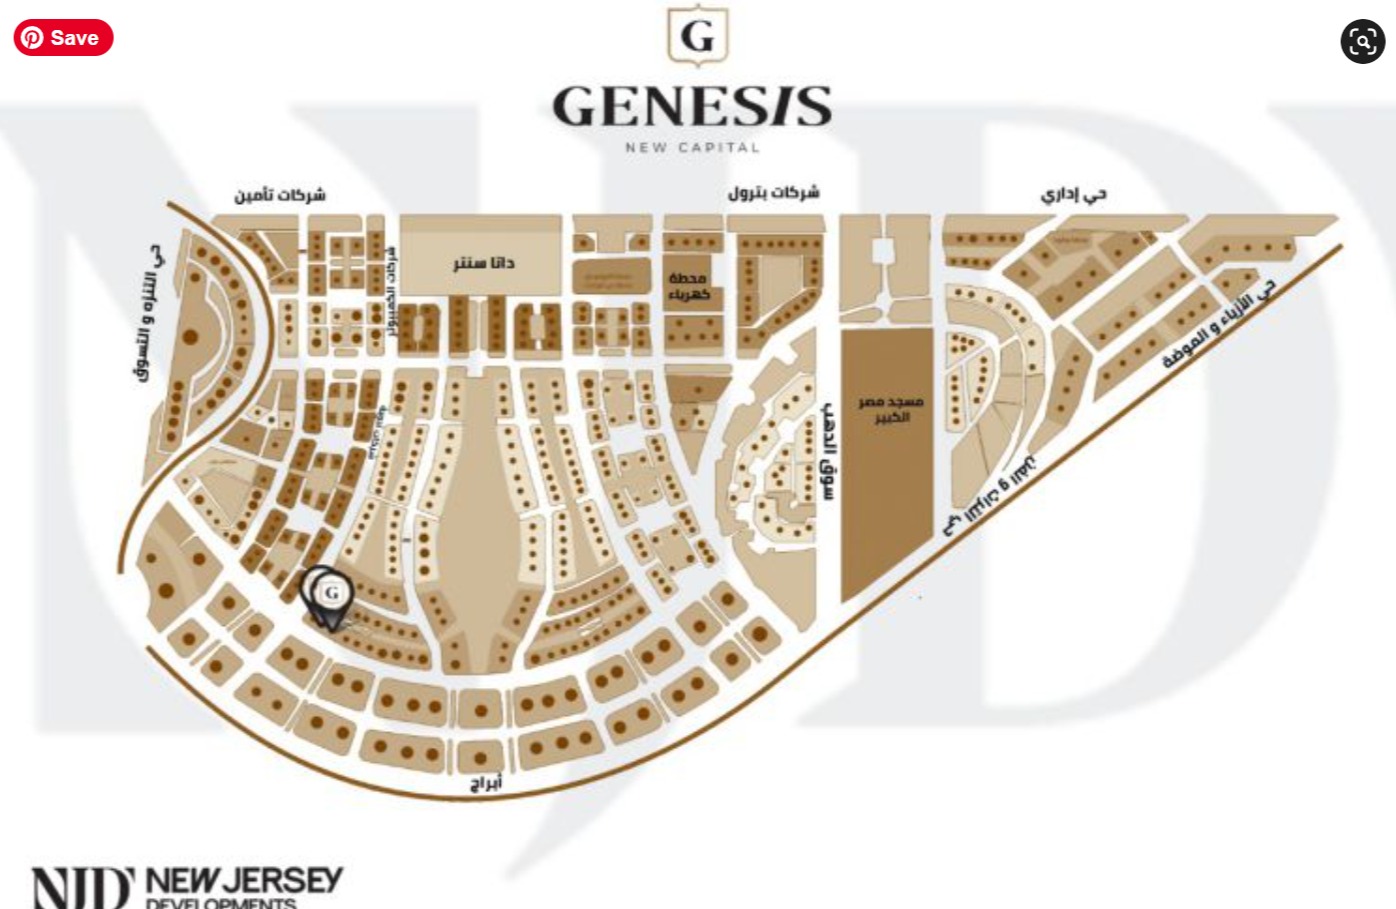 Genesis Tower New Capital Mall New Jersey